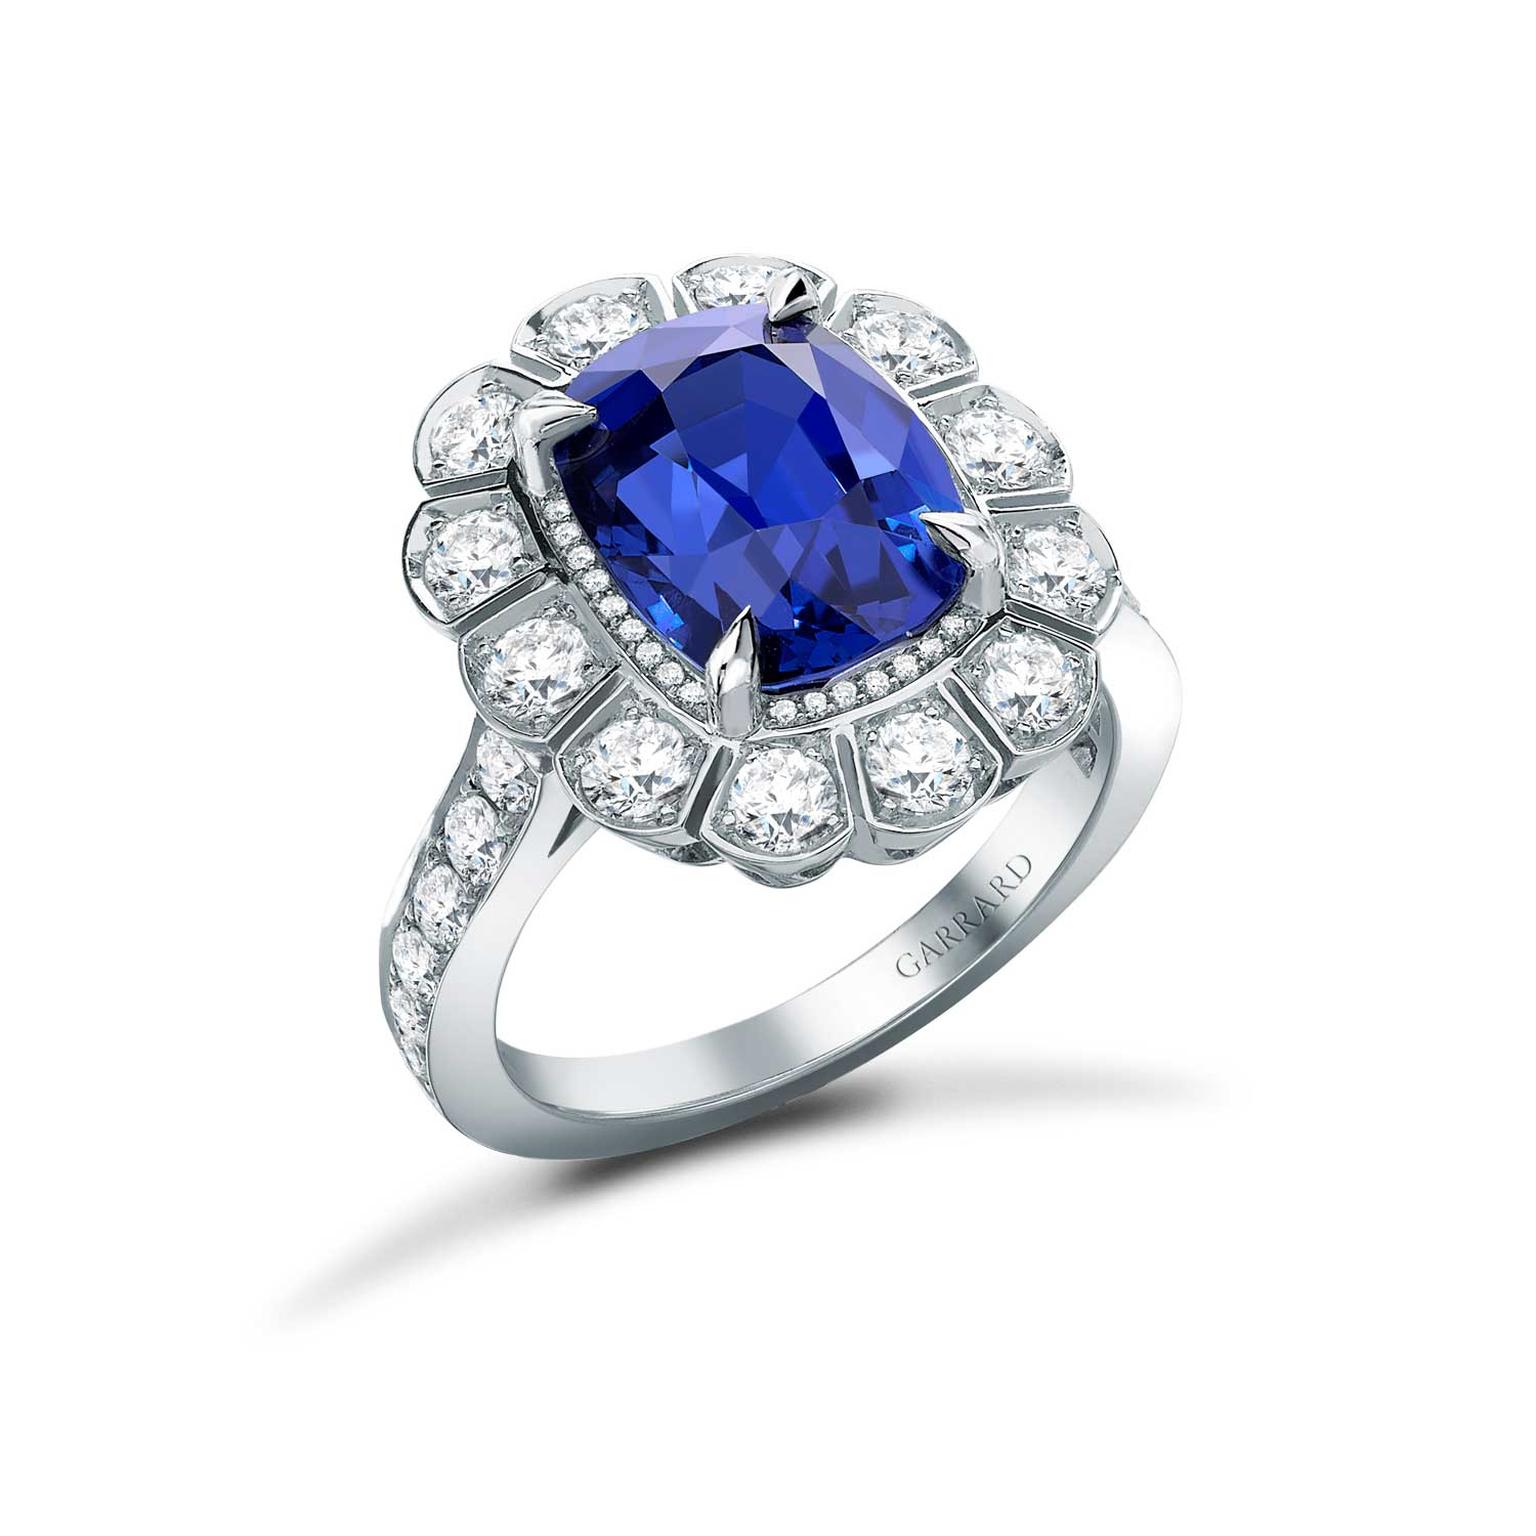 Garrard Marguerite 1735 blue sapphire engagement ring